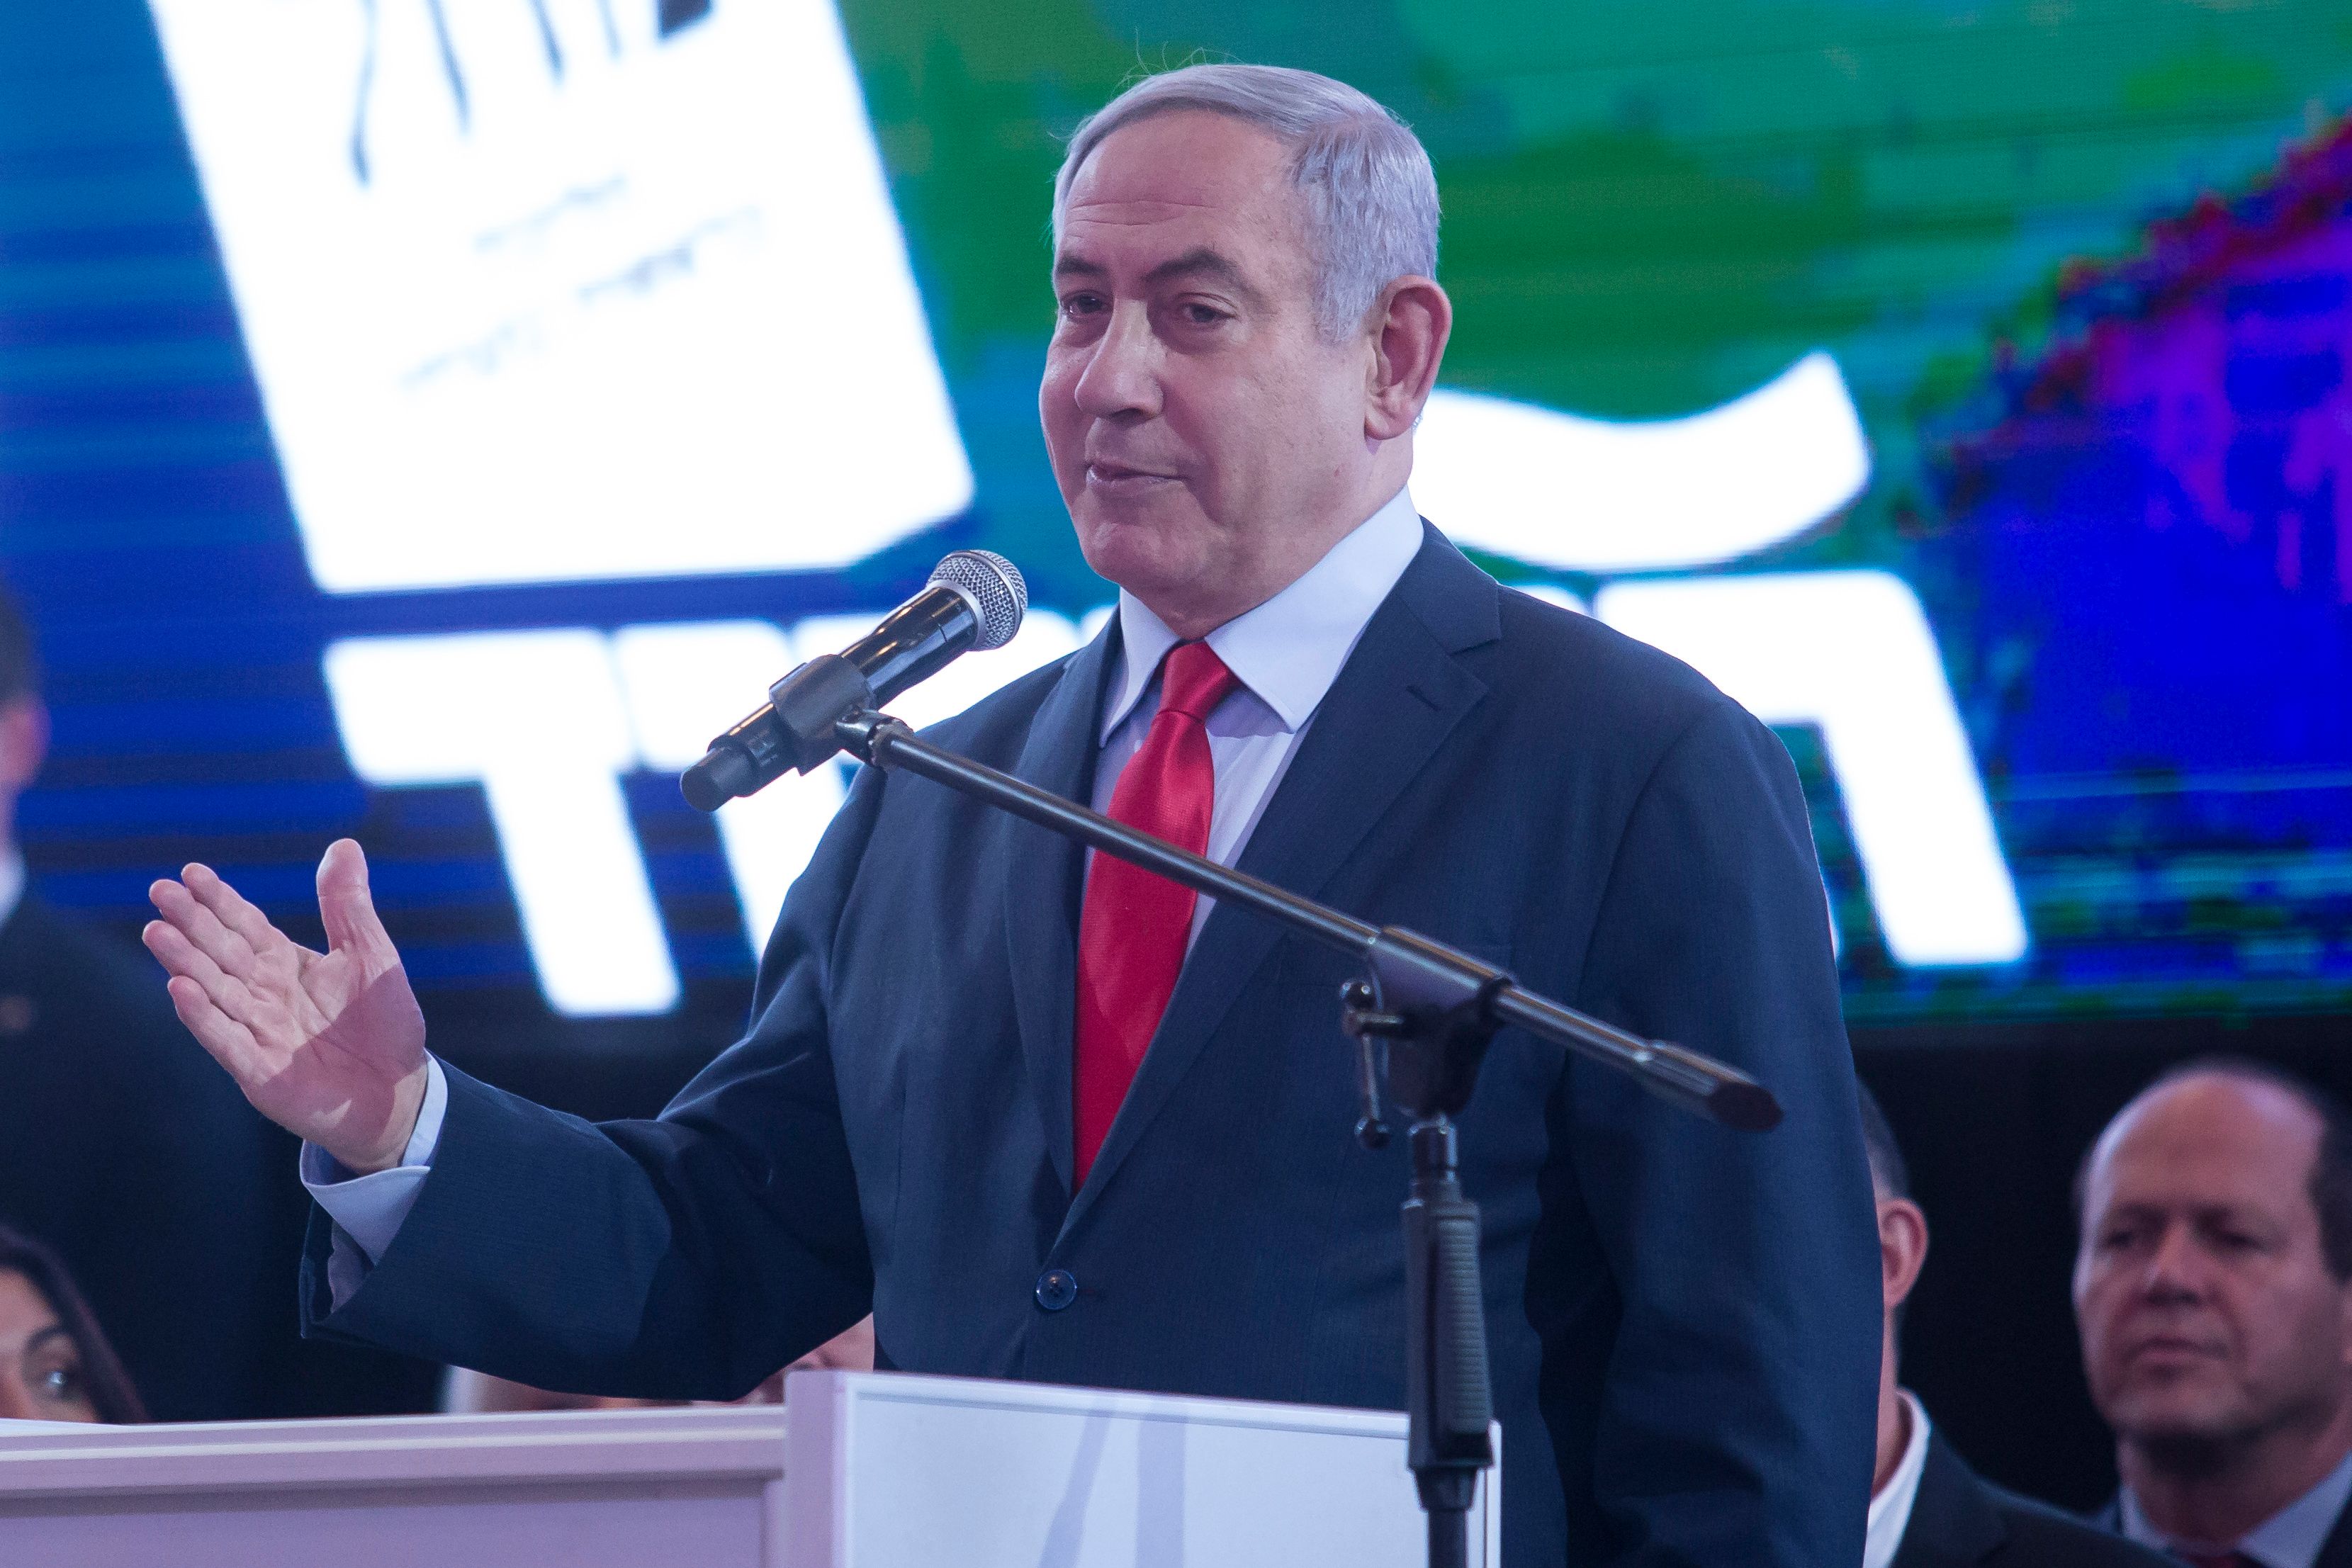 Israeli Prime Minister Benjamin Netanyahu appears at an event.